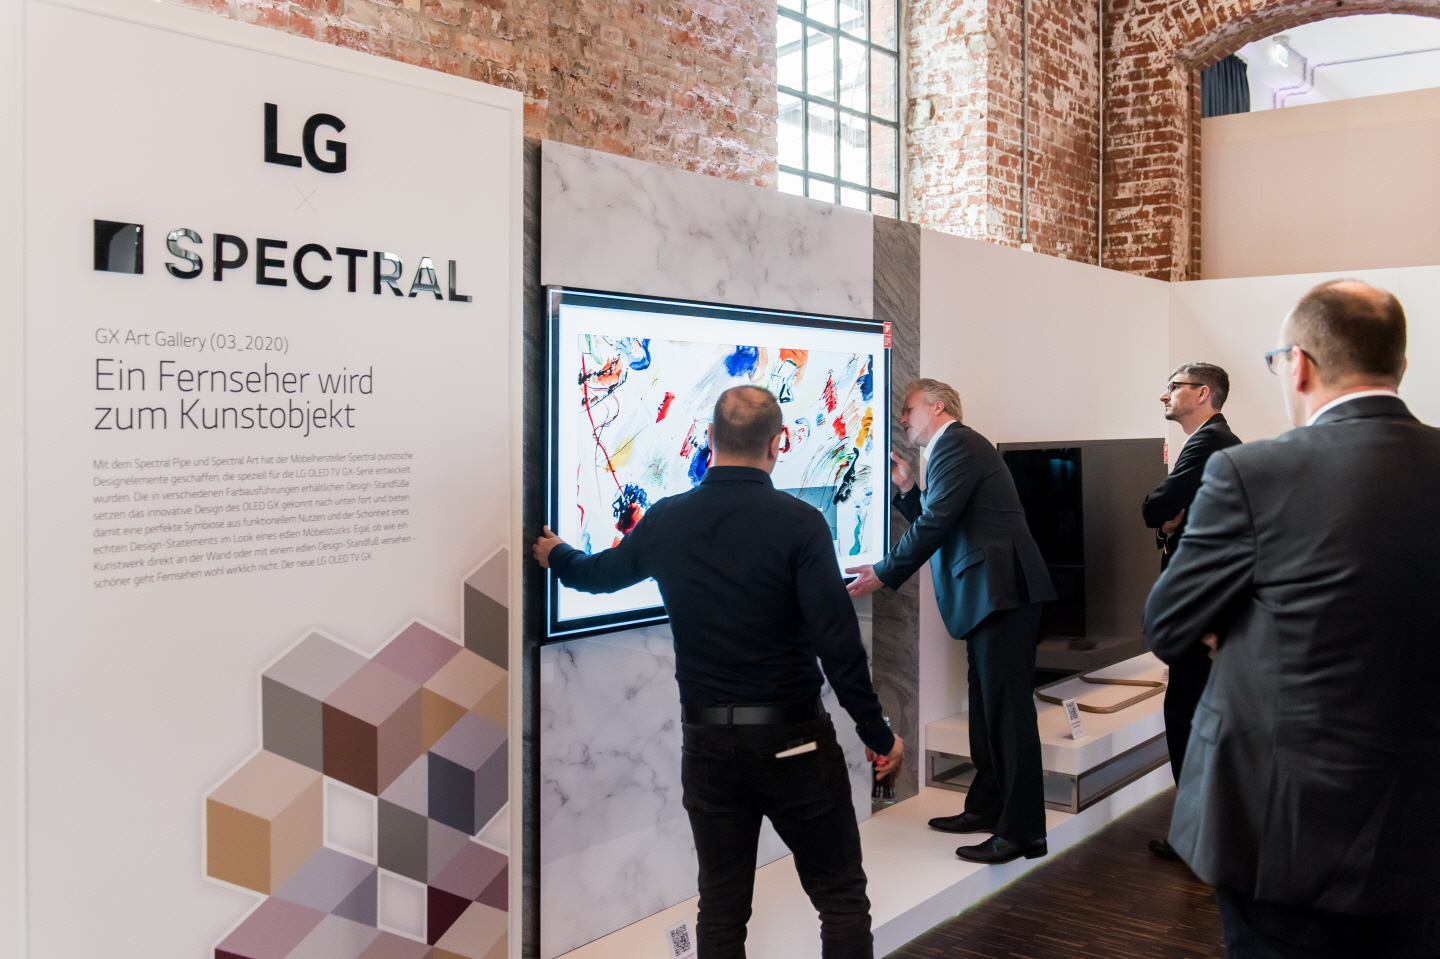 LG 올레드 TV가 유력 매체들로부터 연이은 호평을 받고 있는 가운데, 최근에는 유럽 7개국 소비자매체가 실시한 성능평가에서 1위부터 4위까지를 전부 석권하며 우수성을 인정받았다. 사진은 유럽지역 거래선 관계자들이 2020년형 LG 올레드 TV를 살펴보는 장면.